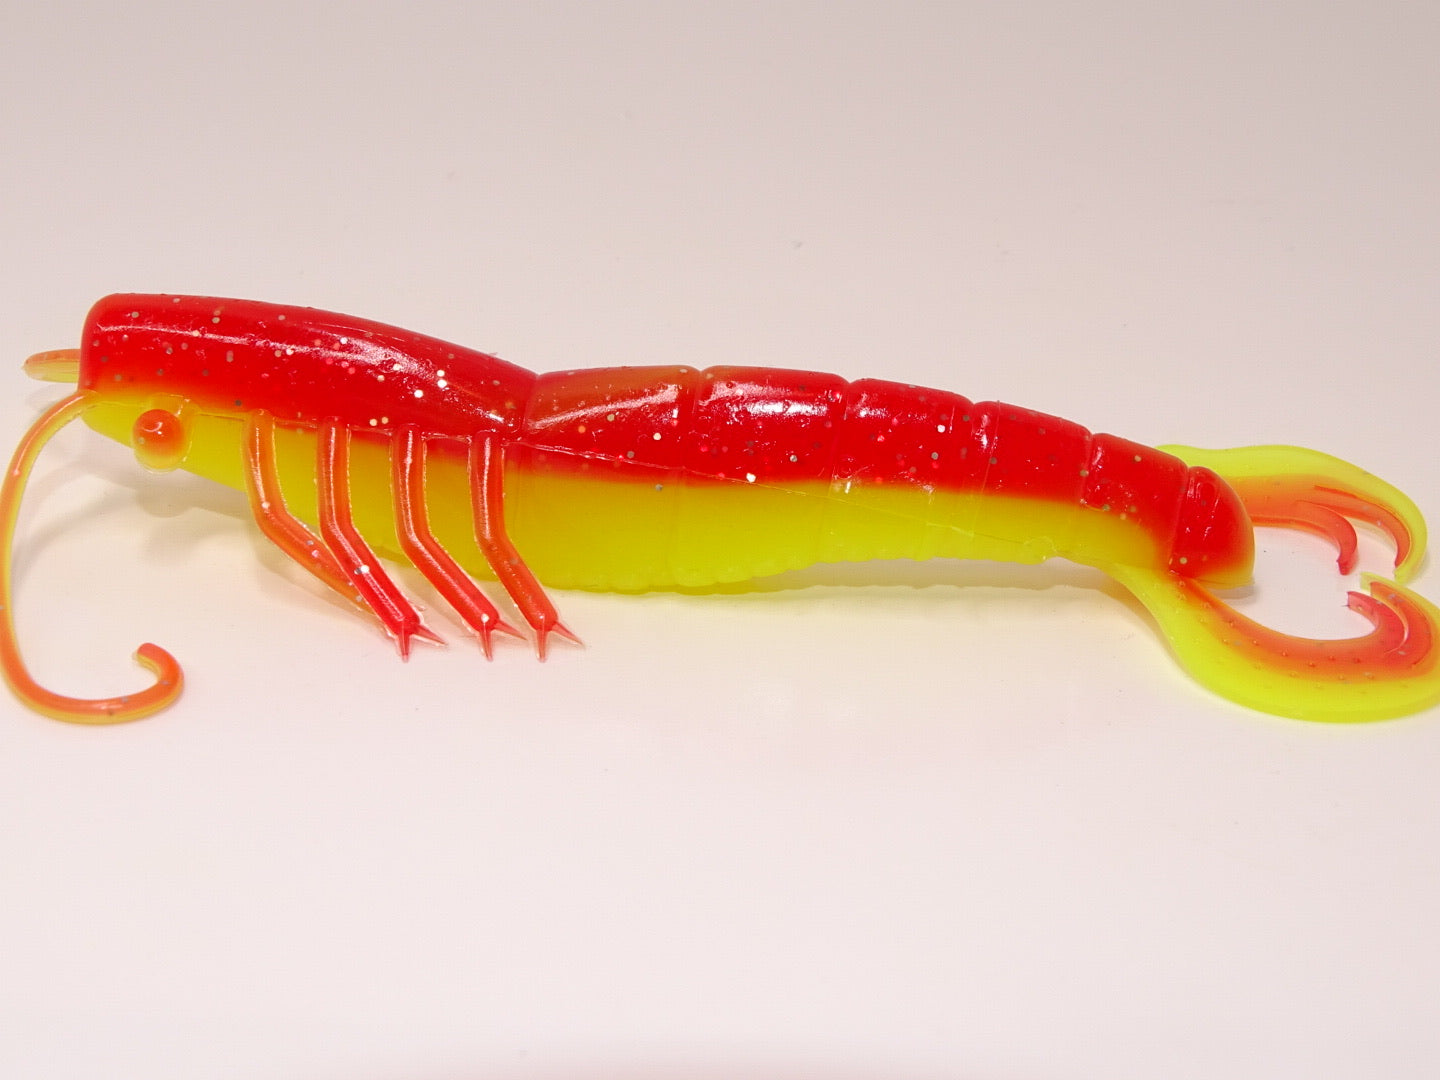 Barn Yard Pimp-Candy Corn Color, 4” Shrimp, qty 6